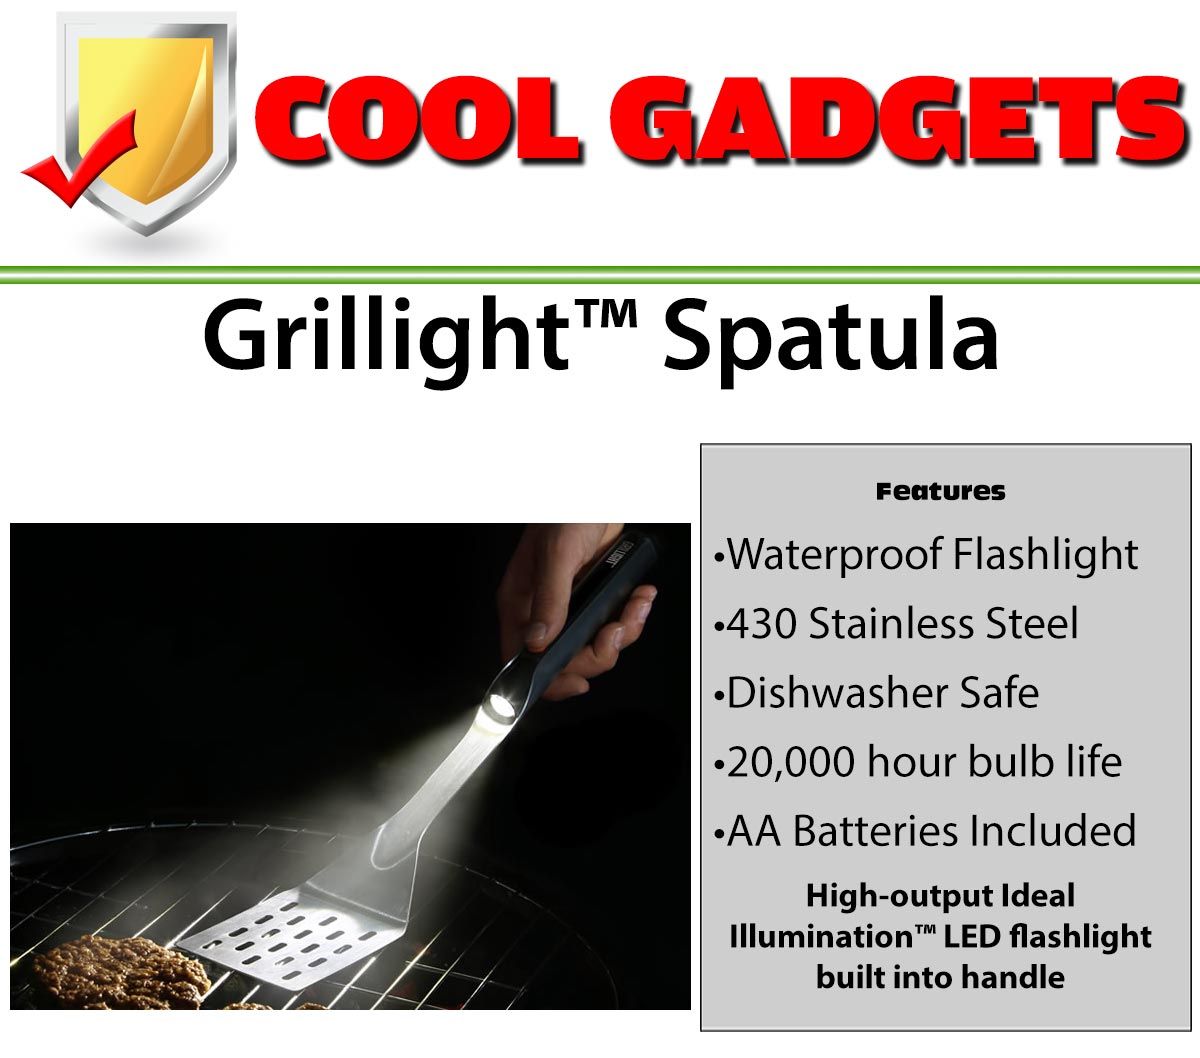 ___Cool-Gadgets-grillight-spatula_Rev-1